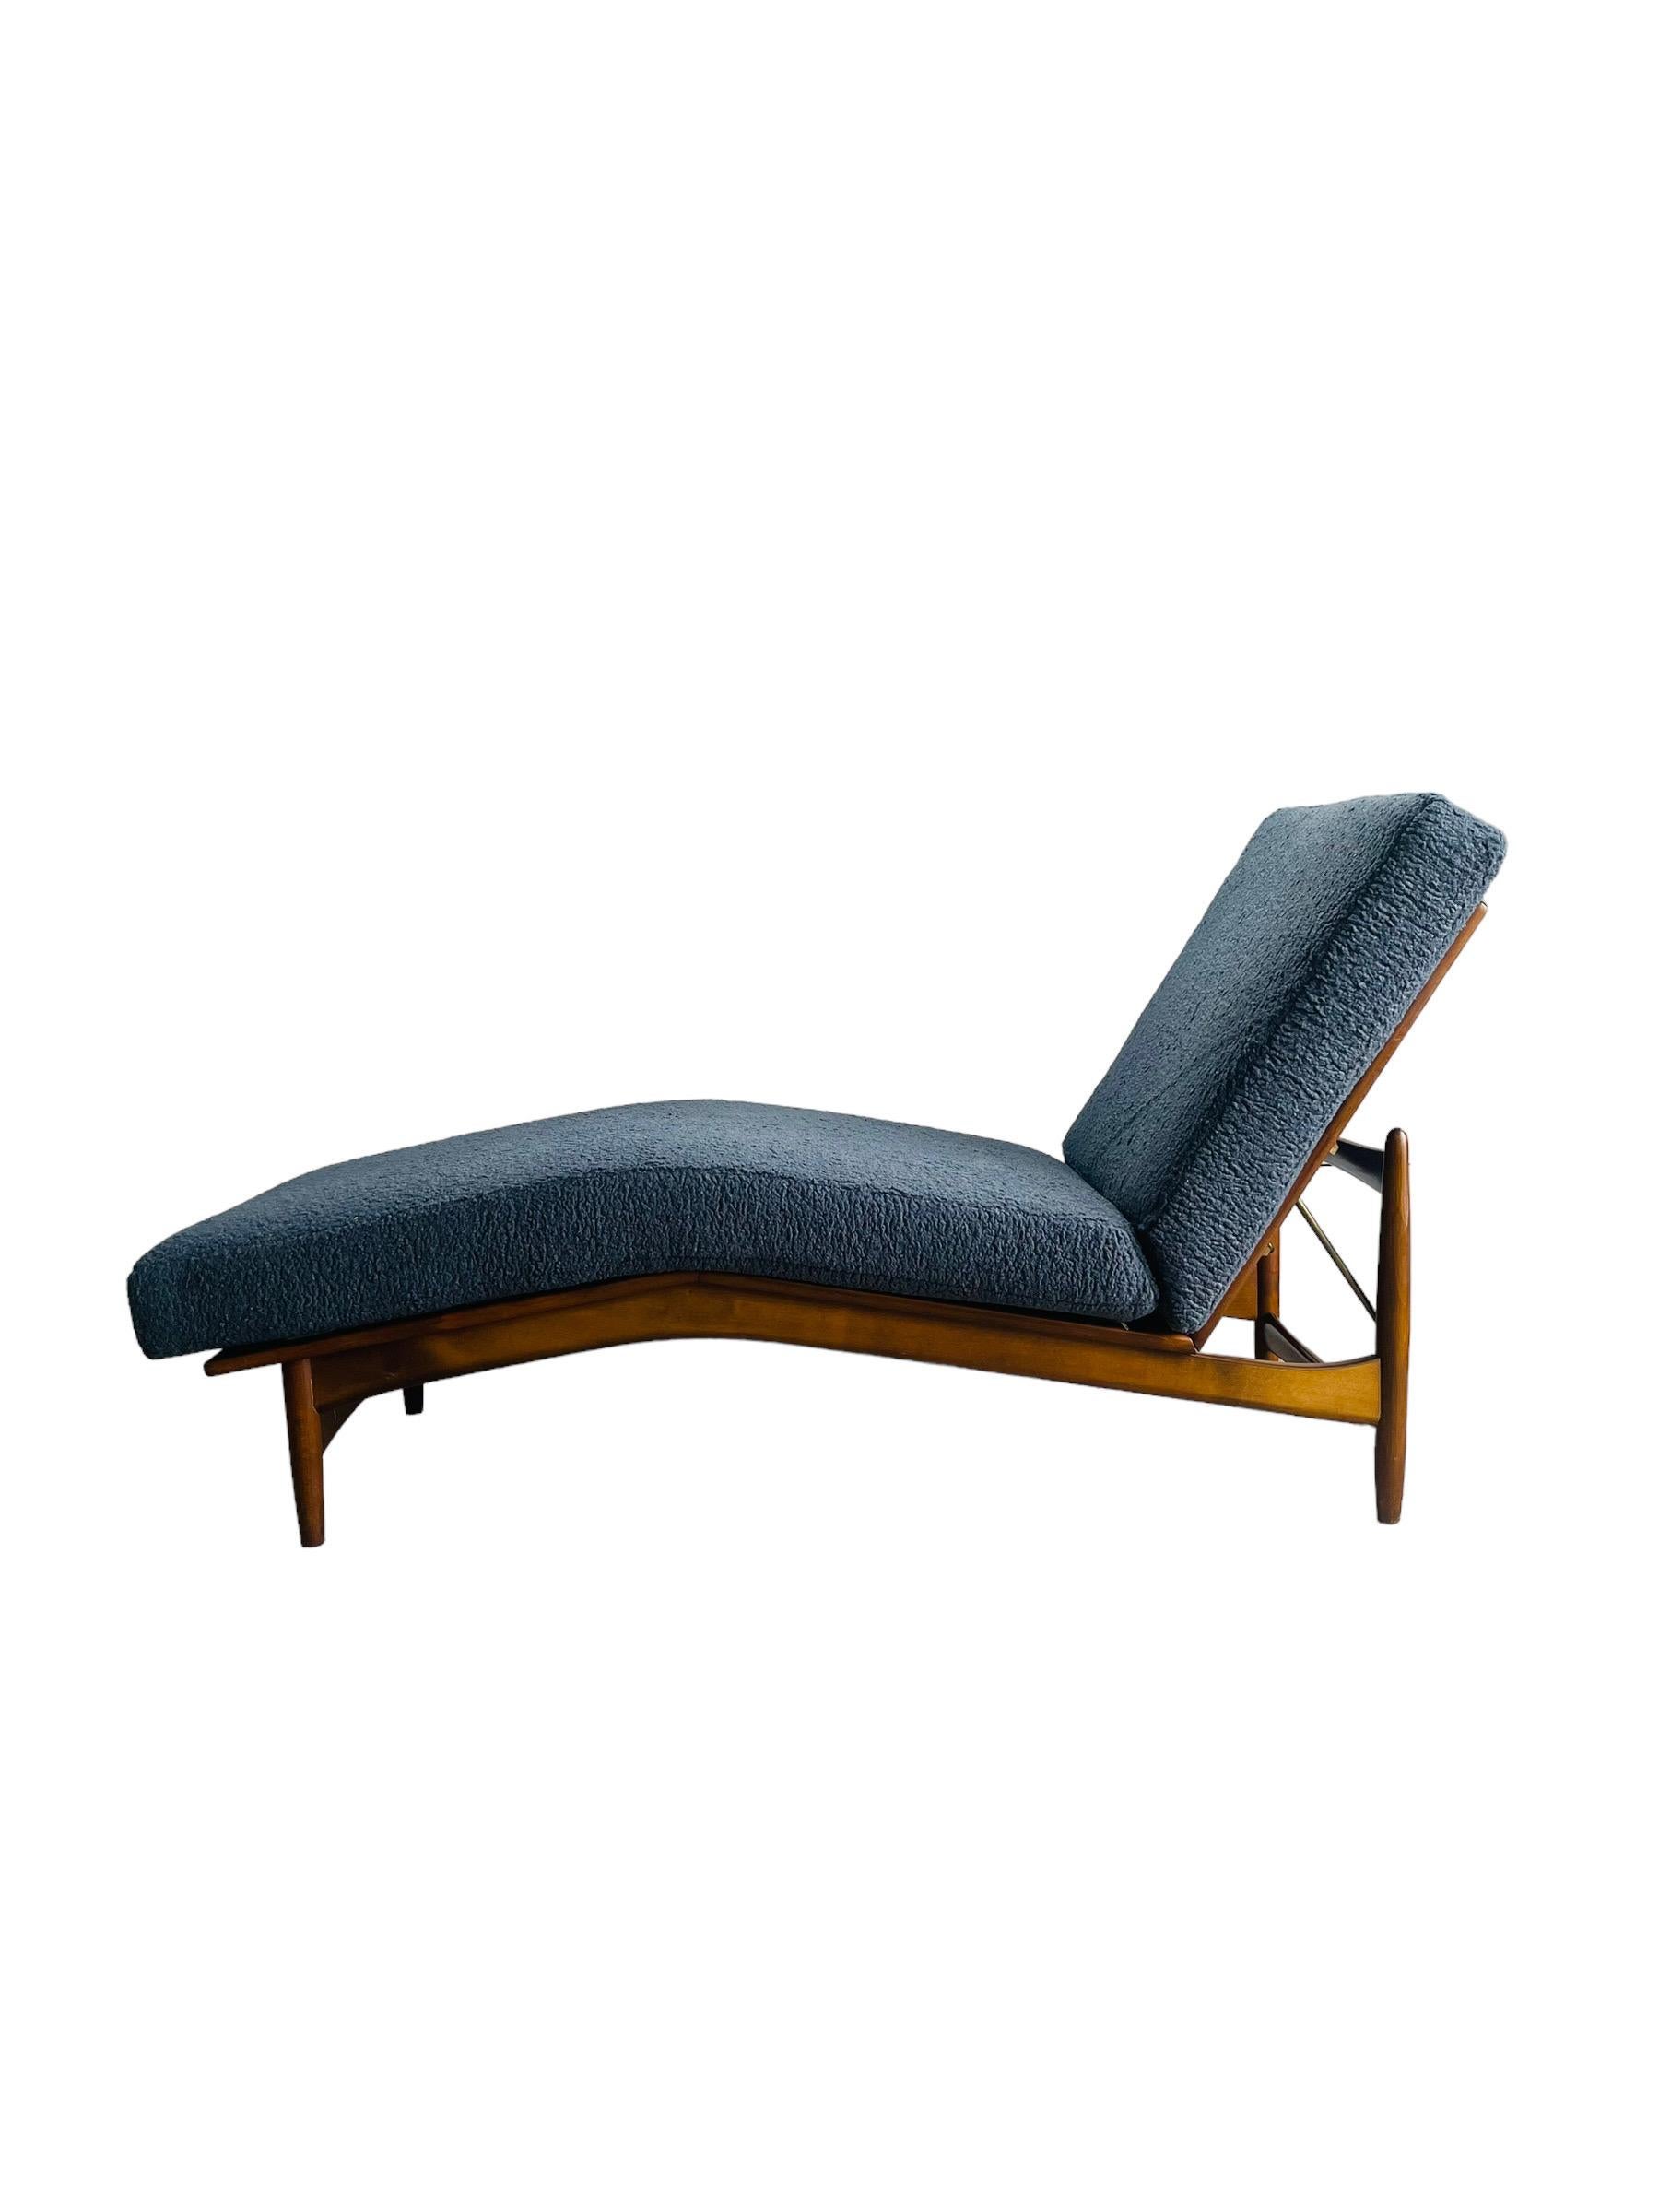 20th Century Danish Modern Chaise Lounge by IB Kofod Larsen